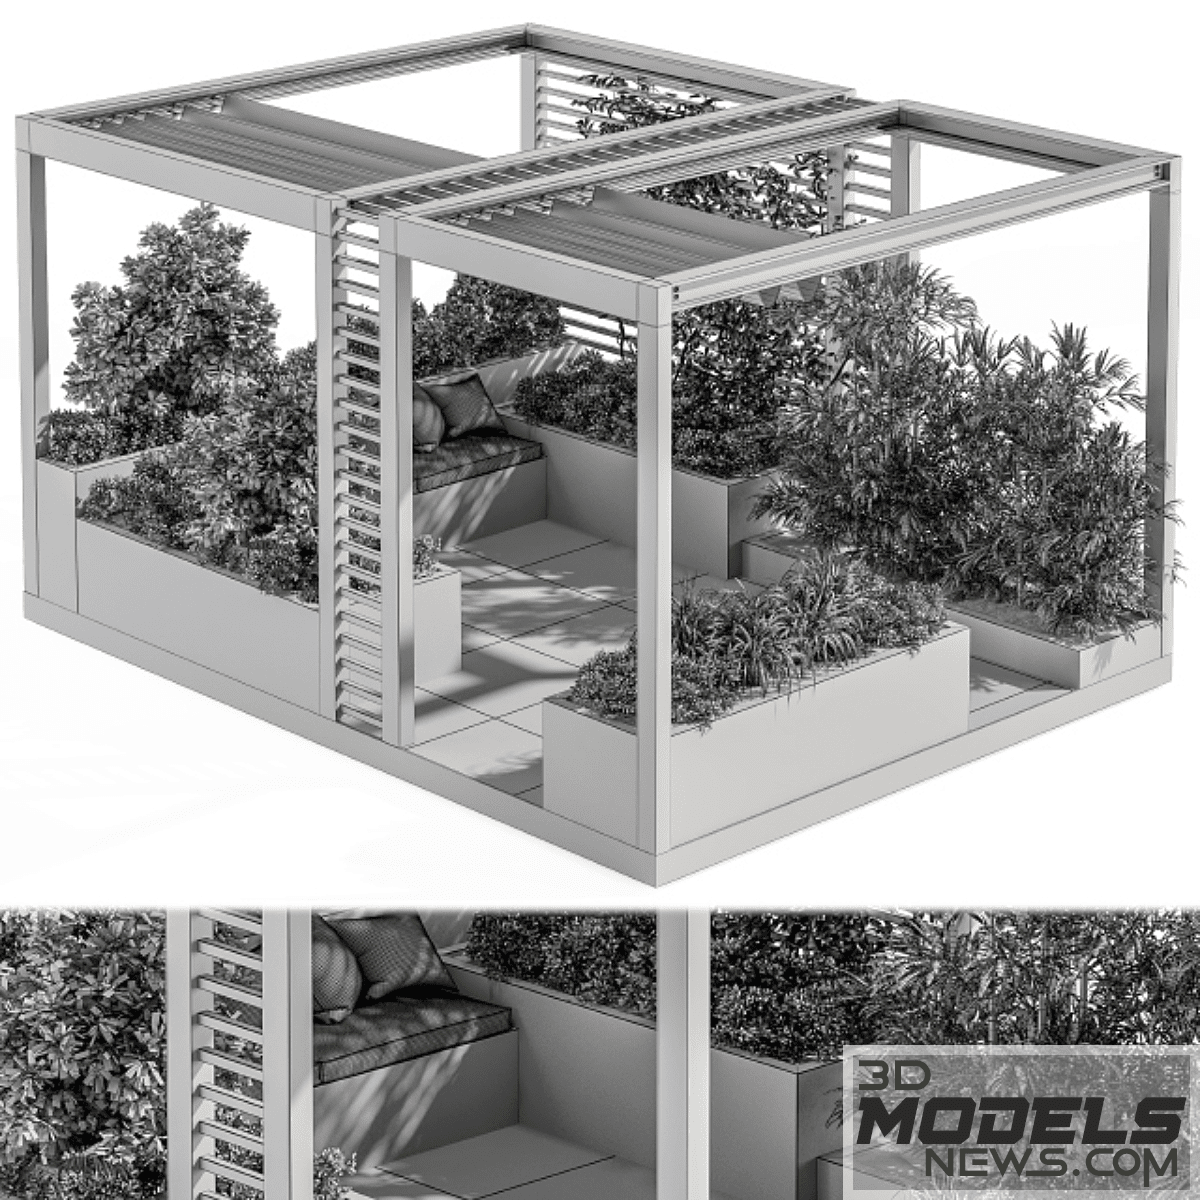 Roof Garden and Landscape Furniture with Pergola Model Set 38 4